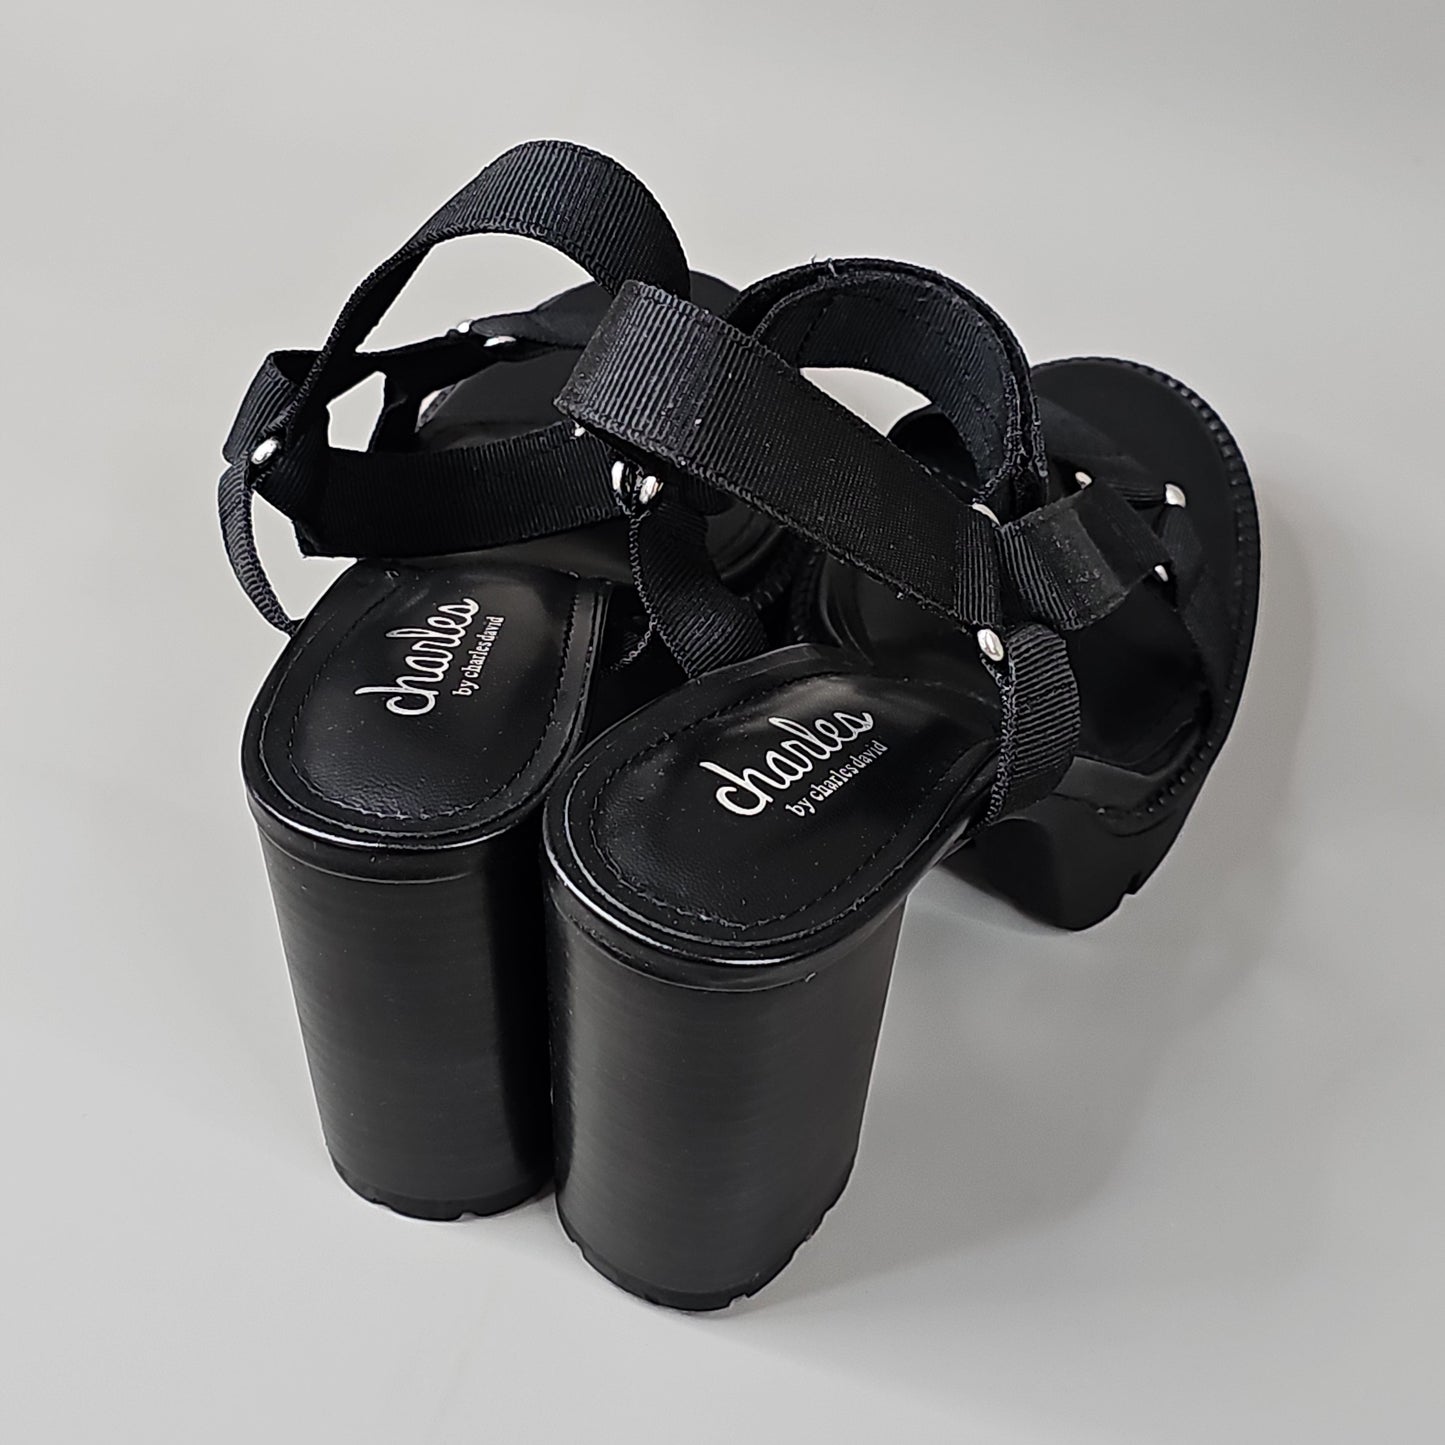 CHARLES BY CHARLES DAVID Women's Vast Sport Sandal Shoe Sz 9 M Black (New)